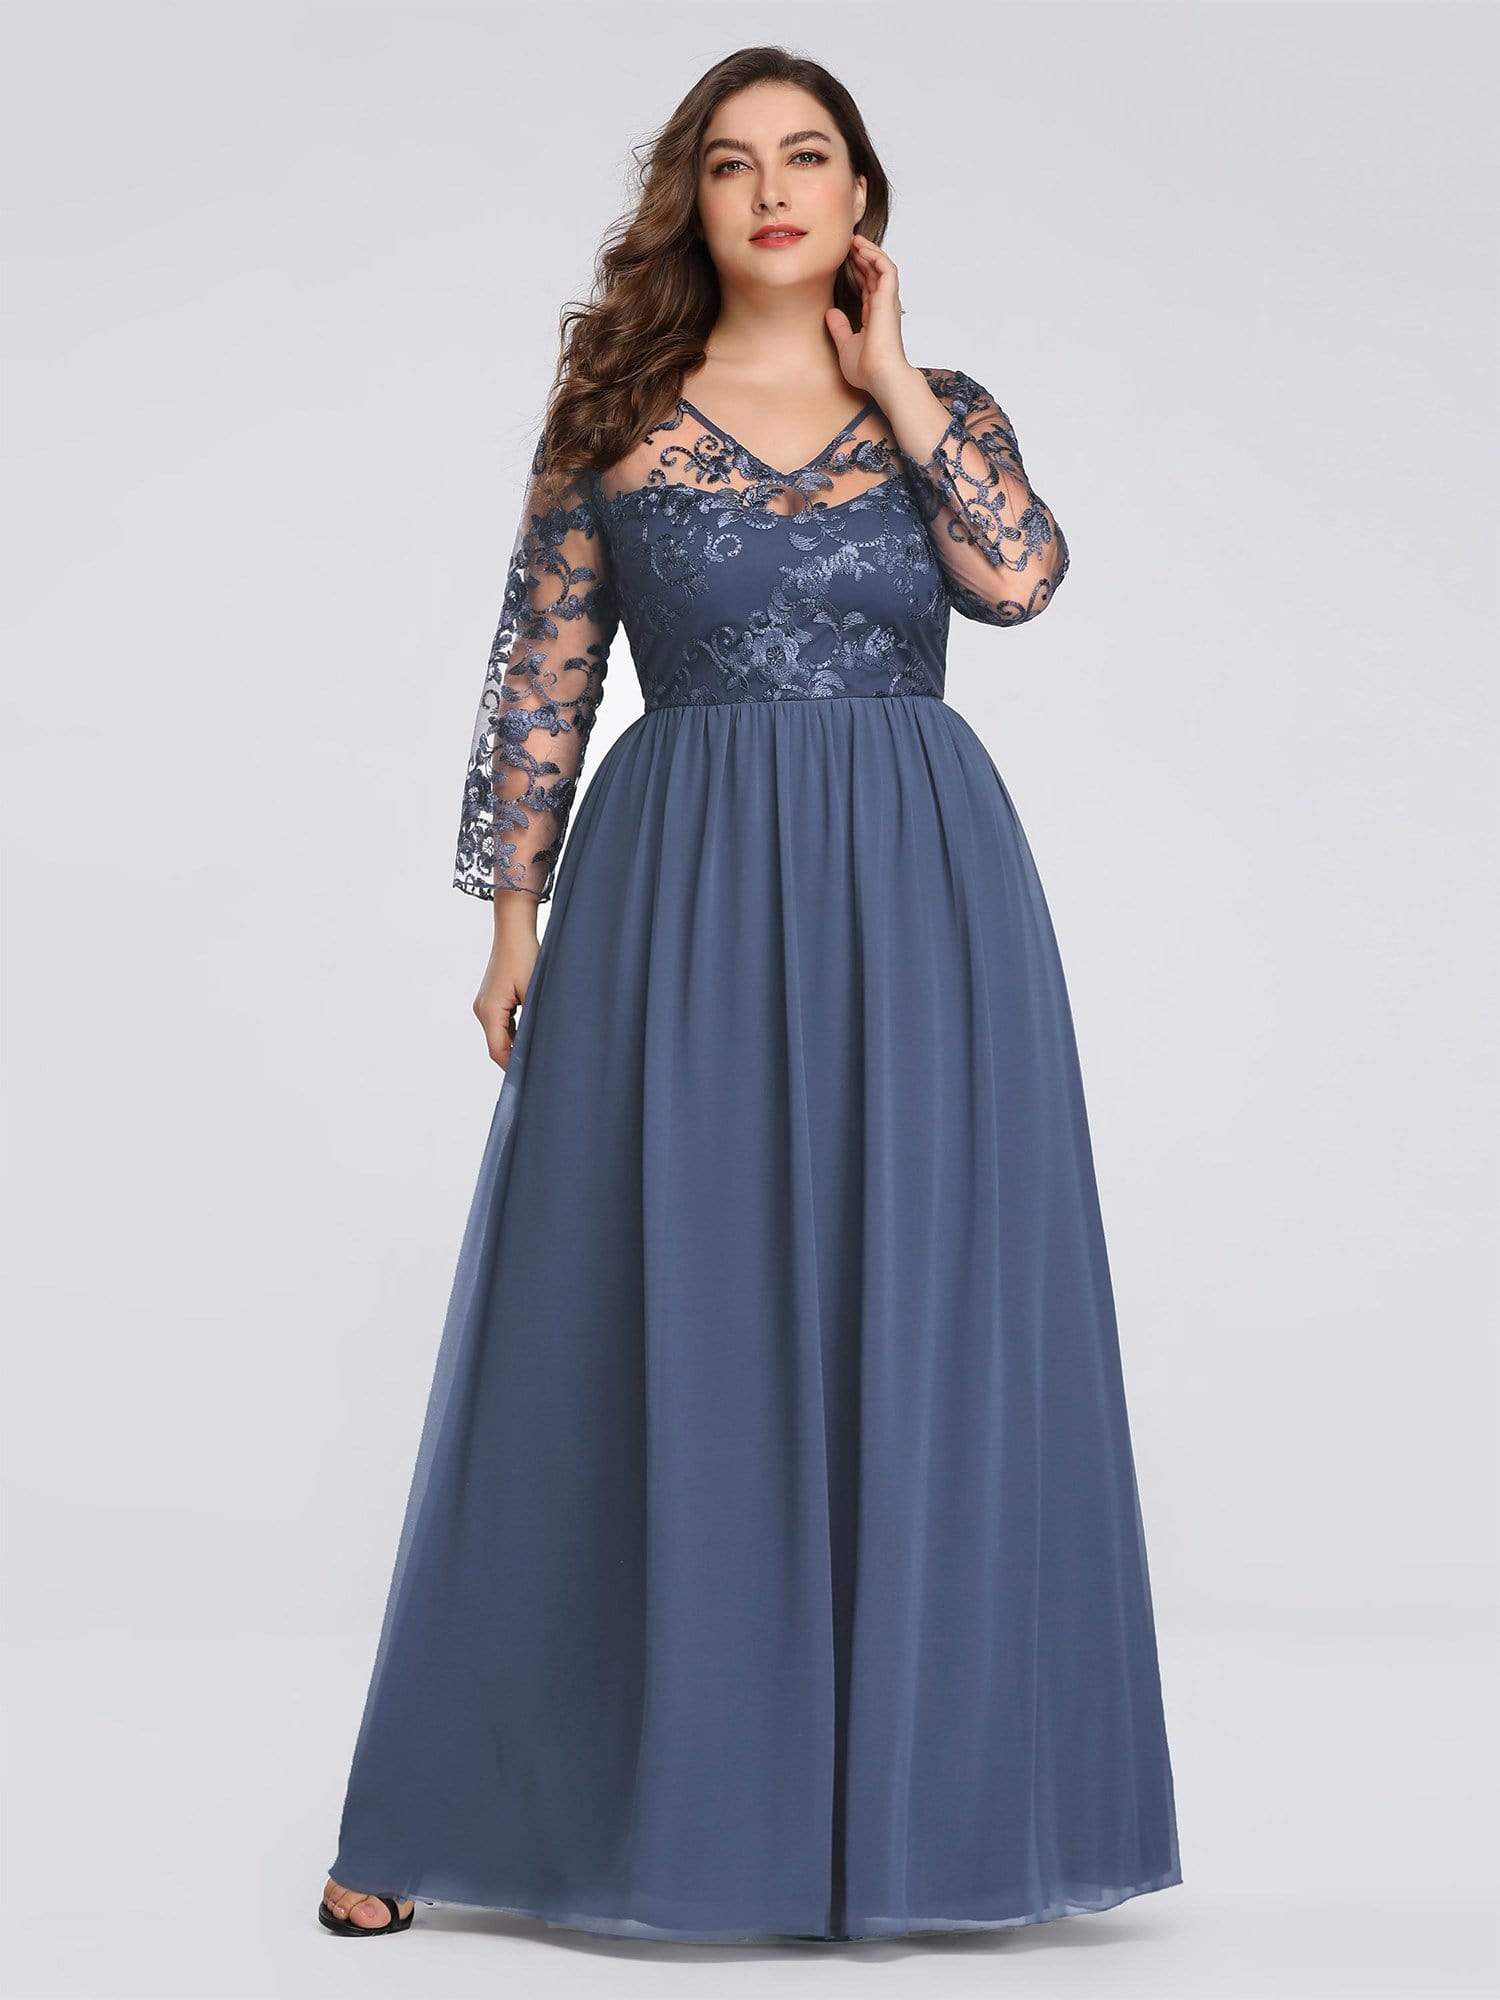 elegant formal plus size dresses